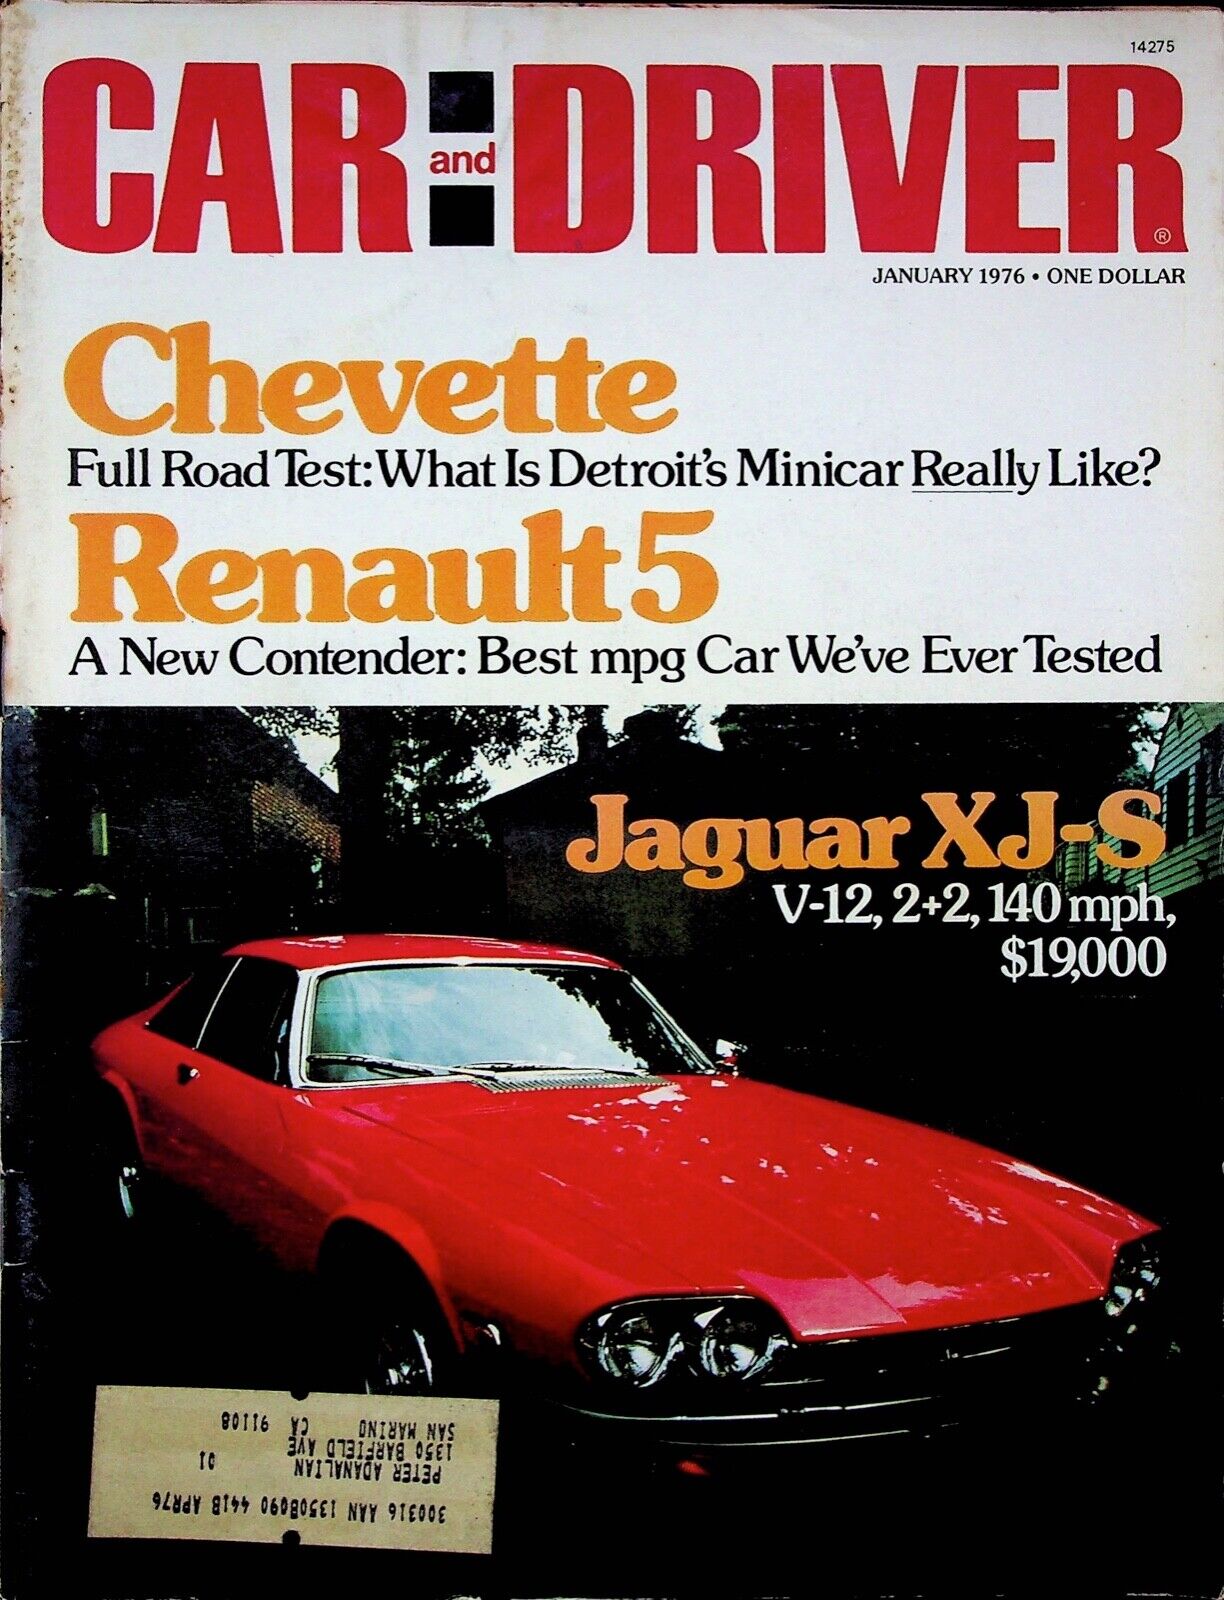 Jaguar XJ-S V-12, 2+2, 140 mph - Car And Driver Magazine -  JAN 1976